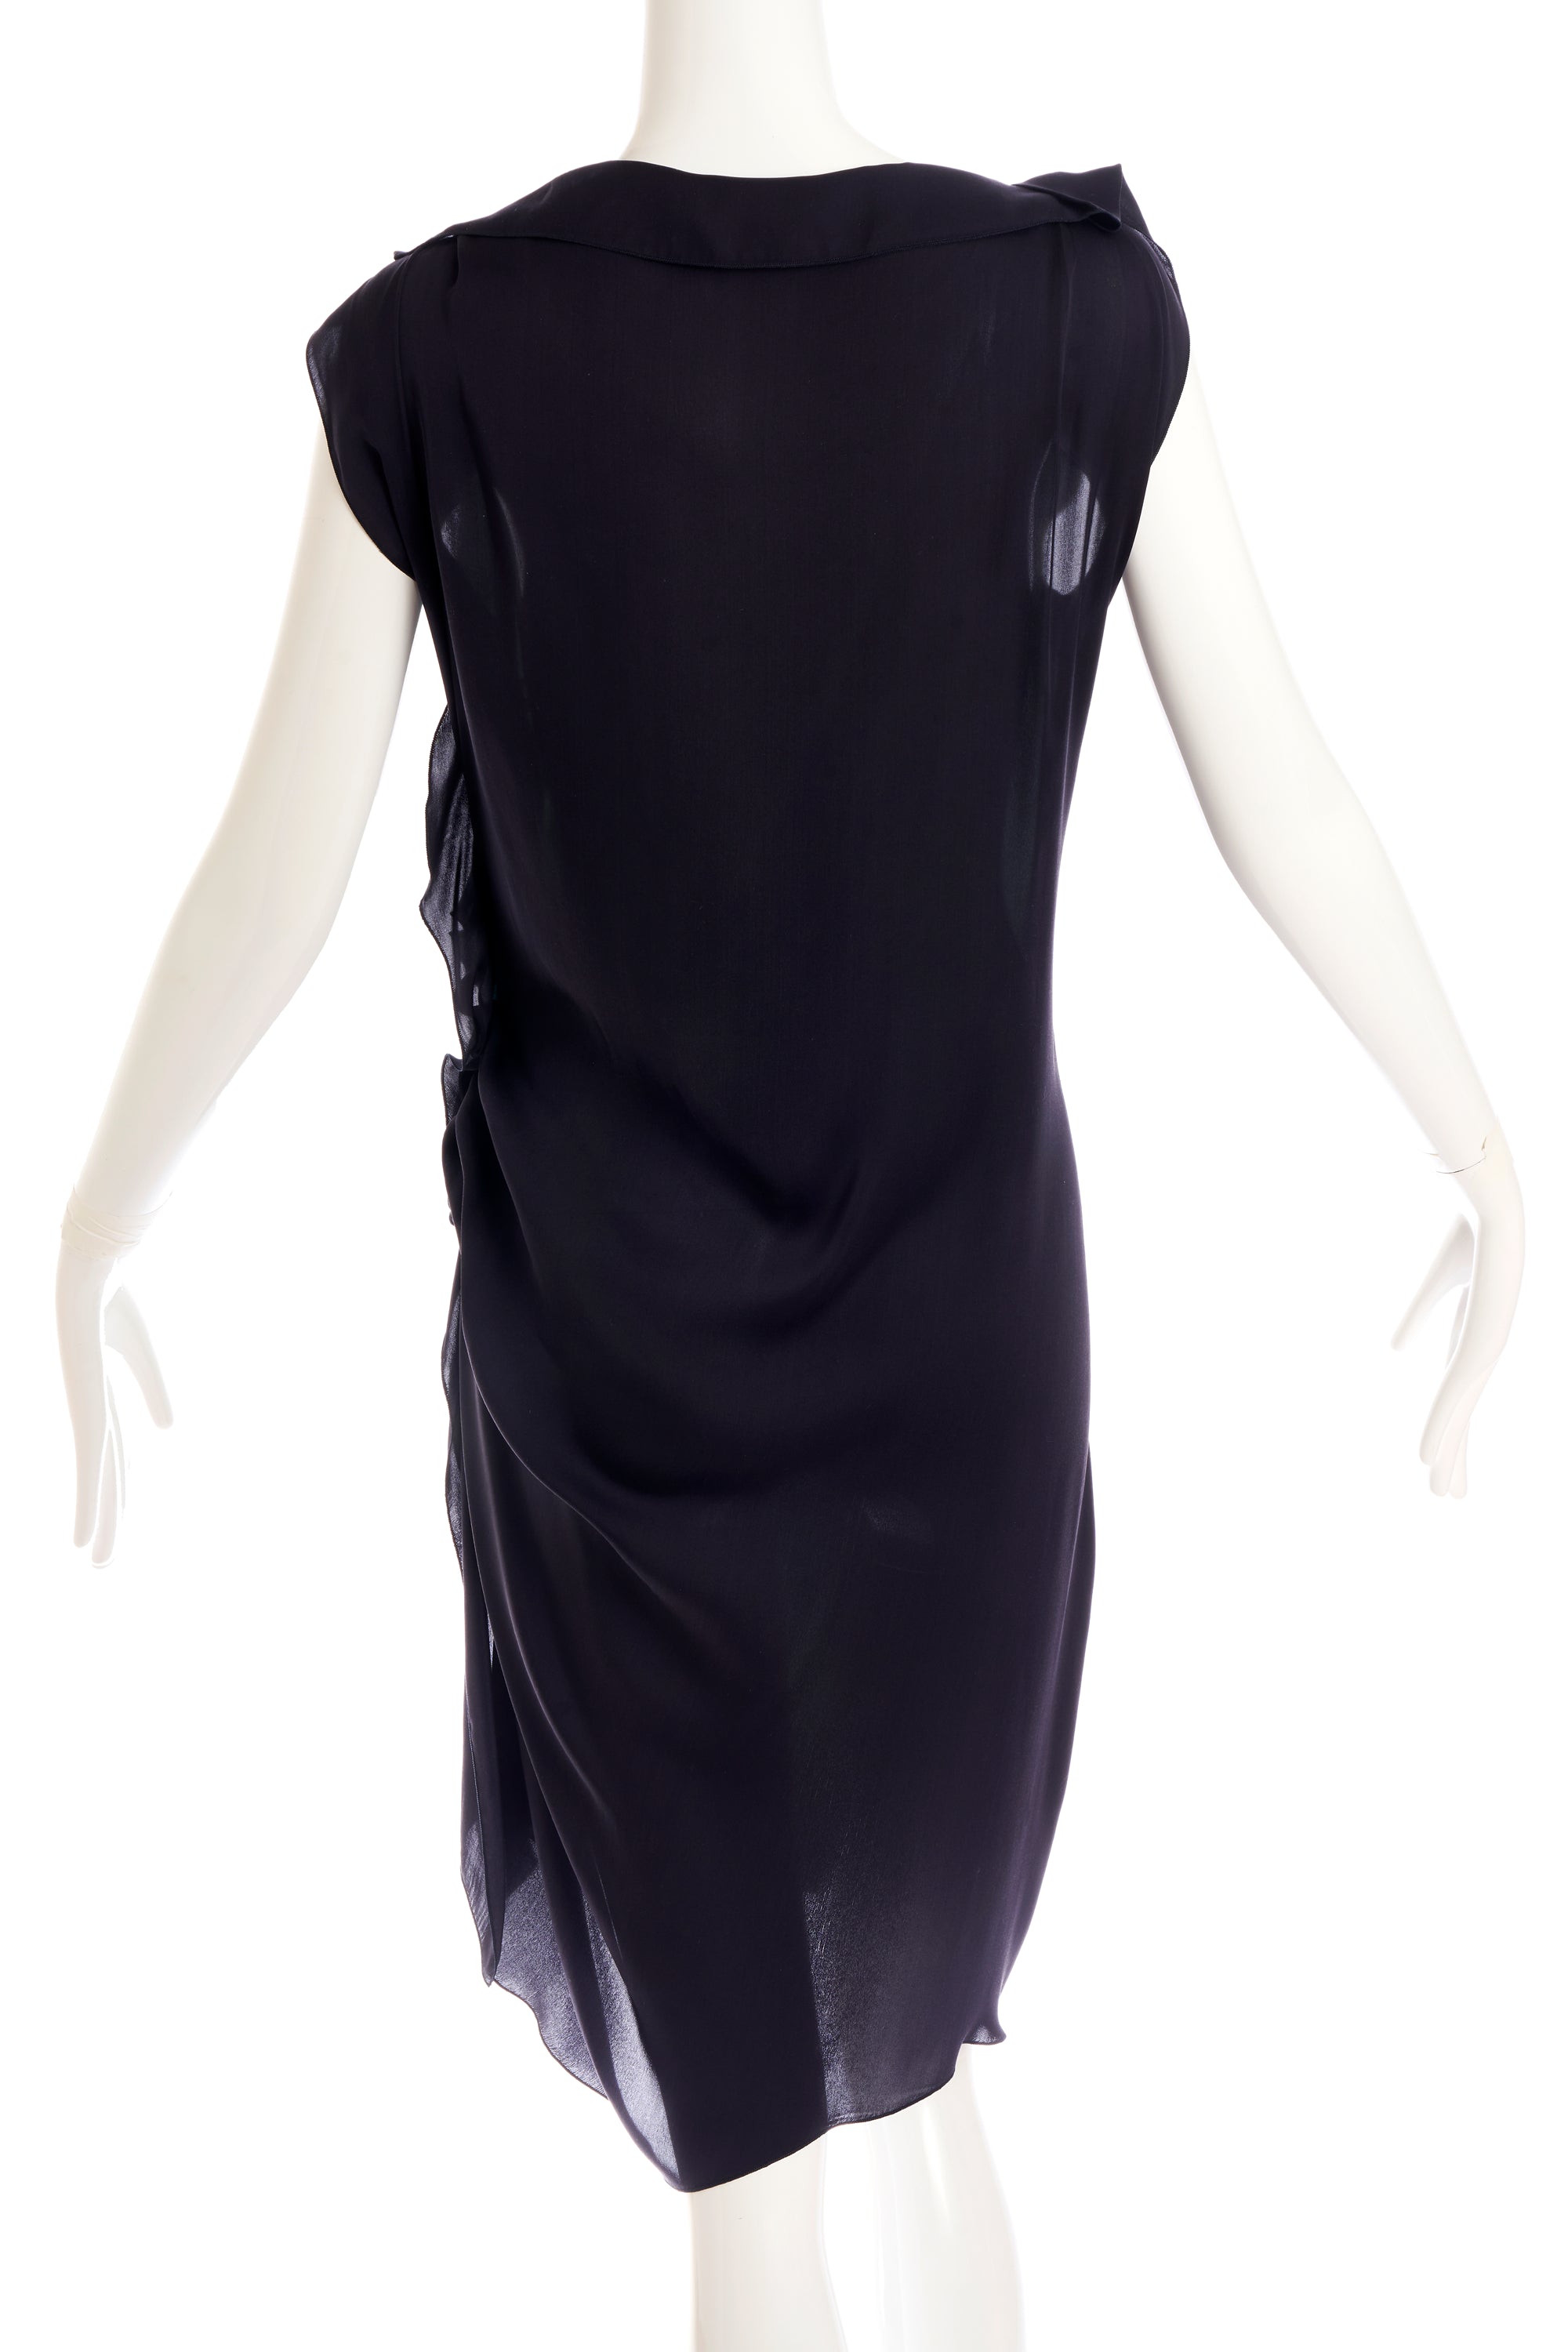 Lanvin Alber Elbaz 2013 Size 36 Green Black Silk Ruffle Dress - Foxy Couture Carmel